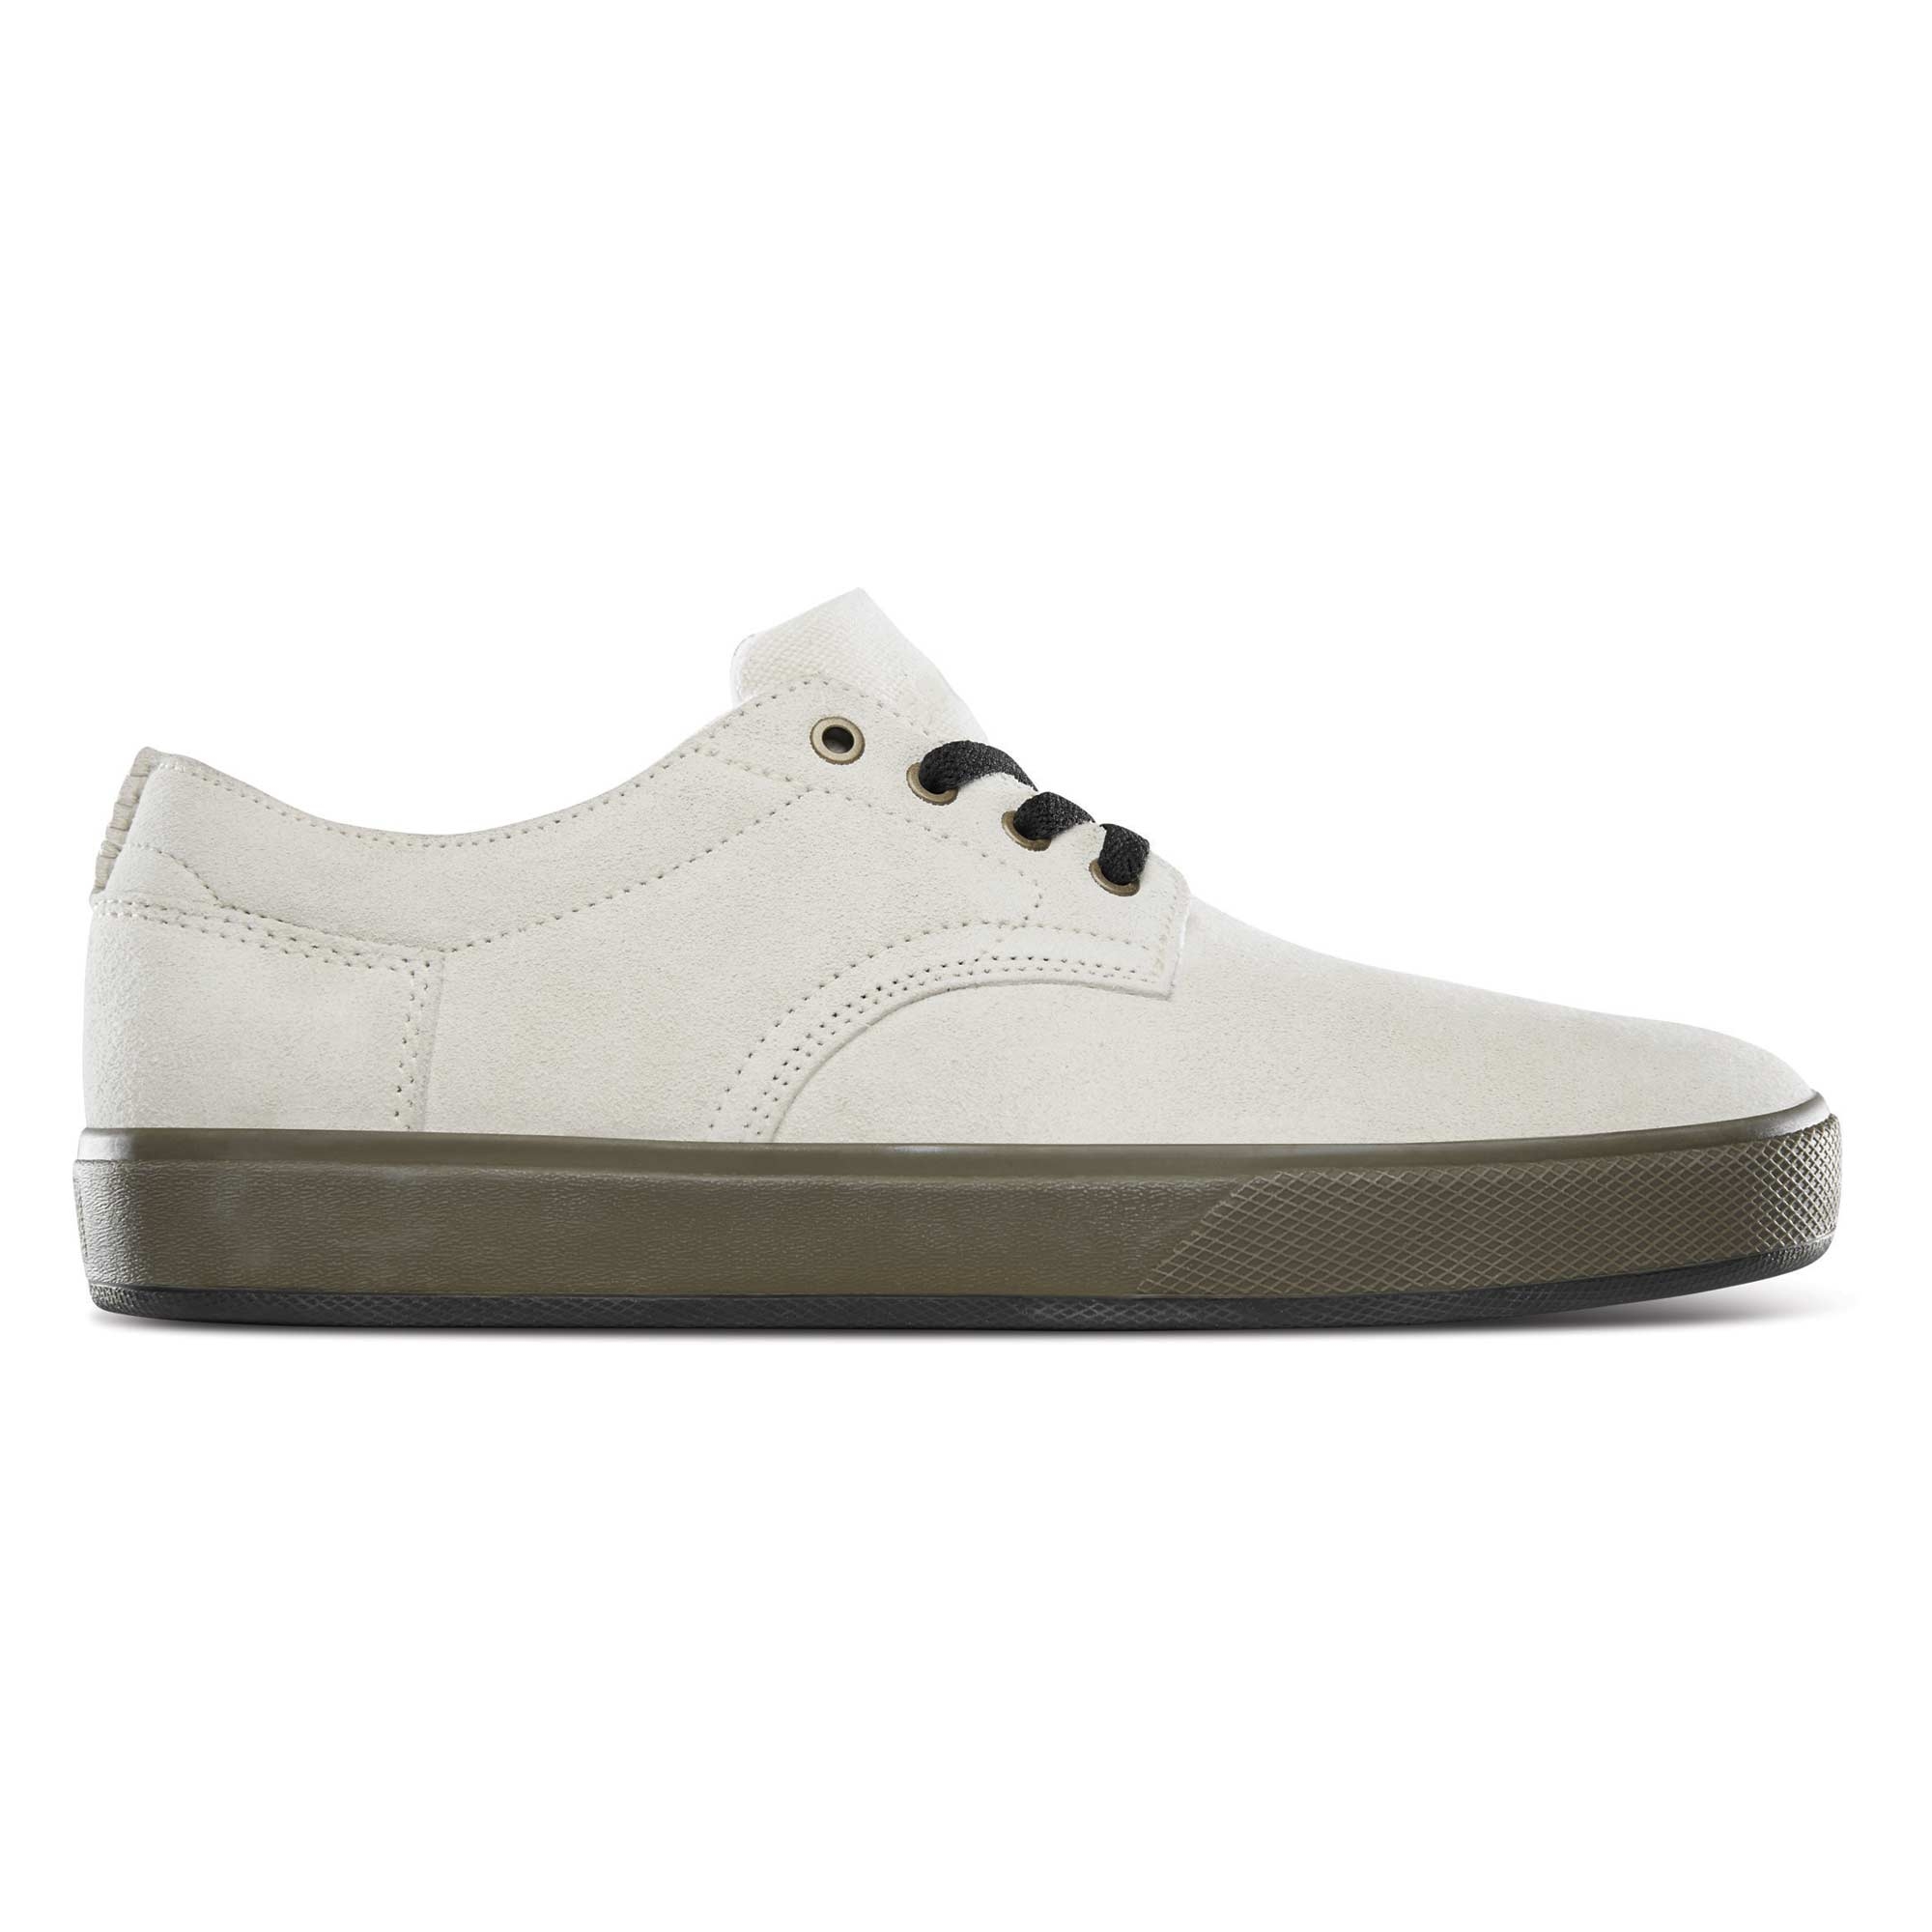 EMERICA Shoe SPANKY G6 whi/gre white/green